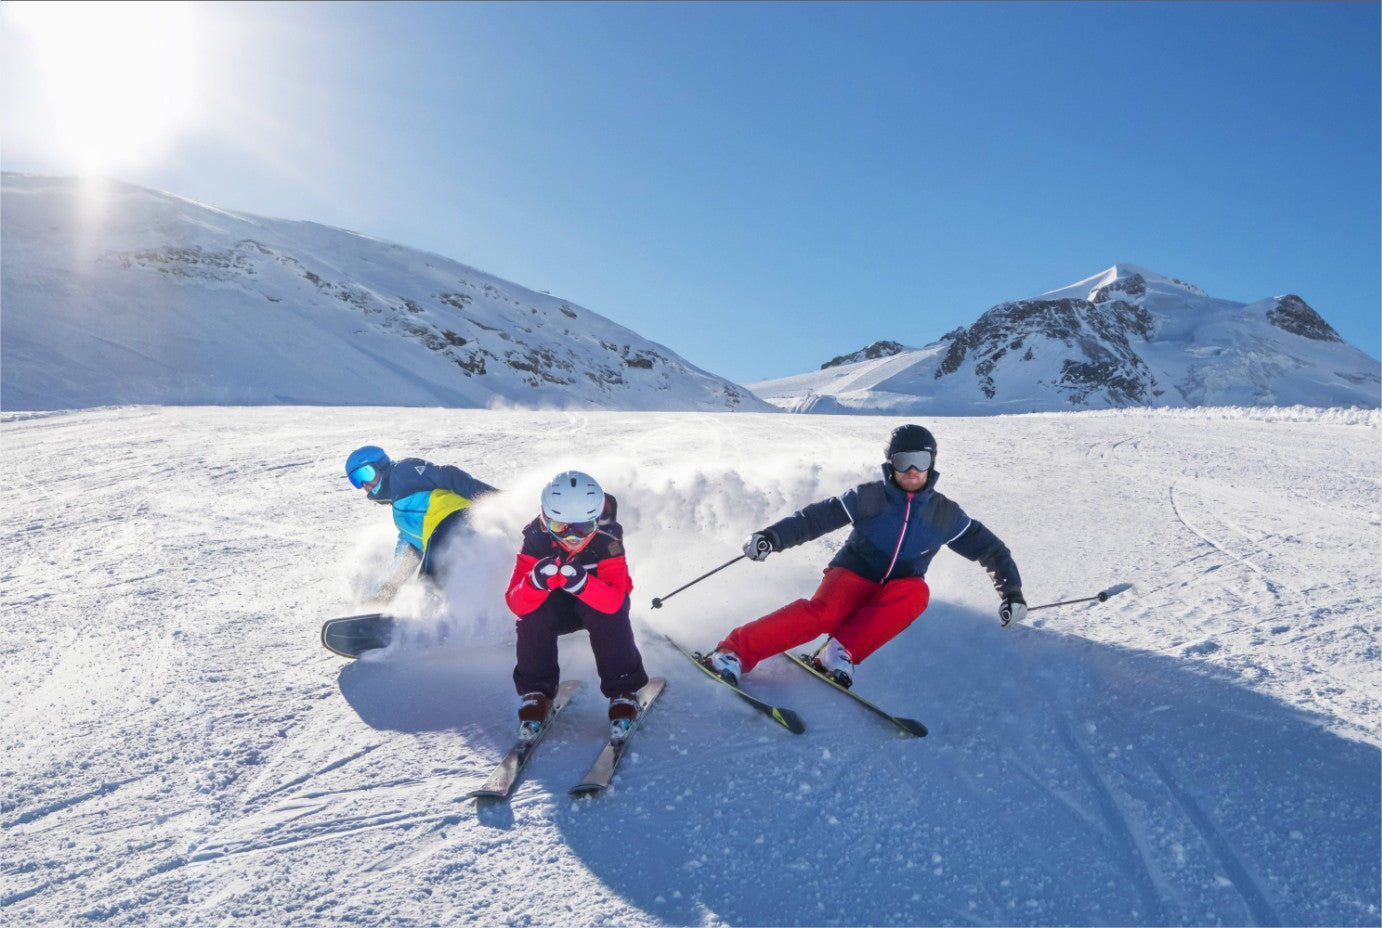 Meet Decathlon's Ski and Snowboard Brand, Wed'ze